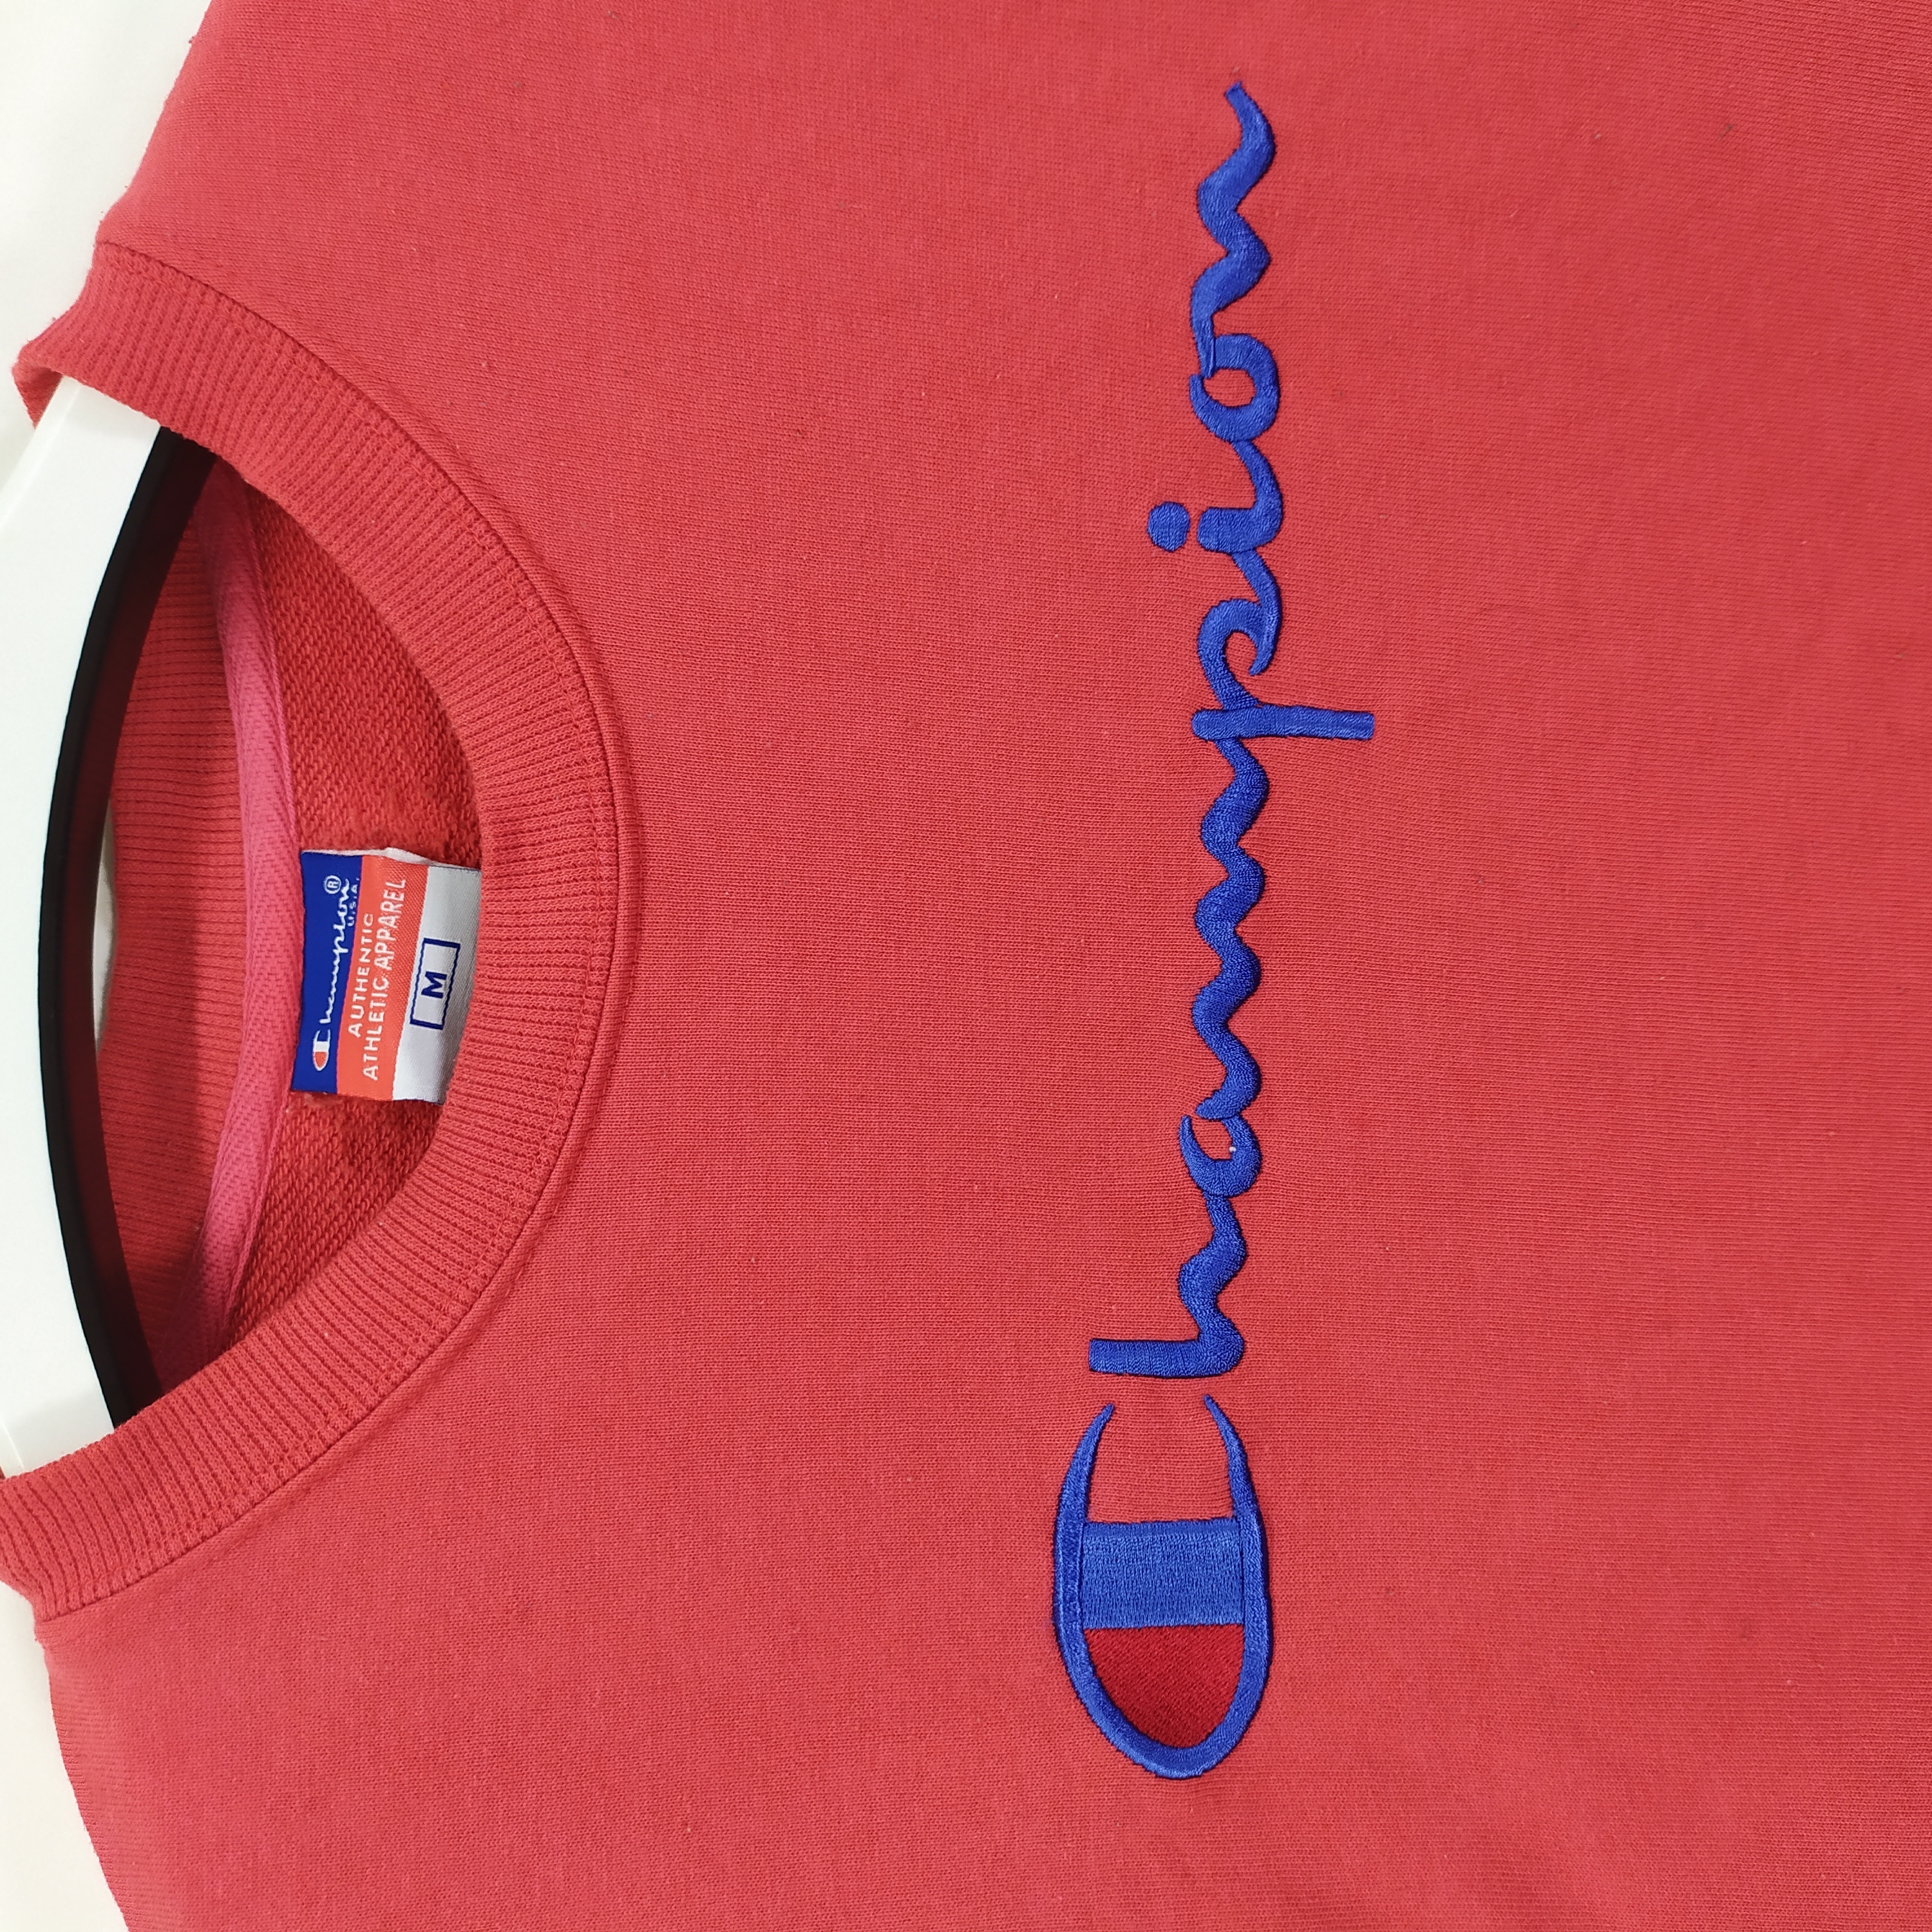 Champion Embroidery Big Logo Red Sweatshirts #229-7 - 2